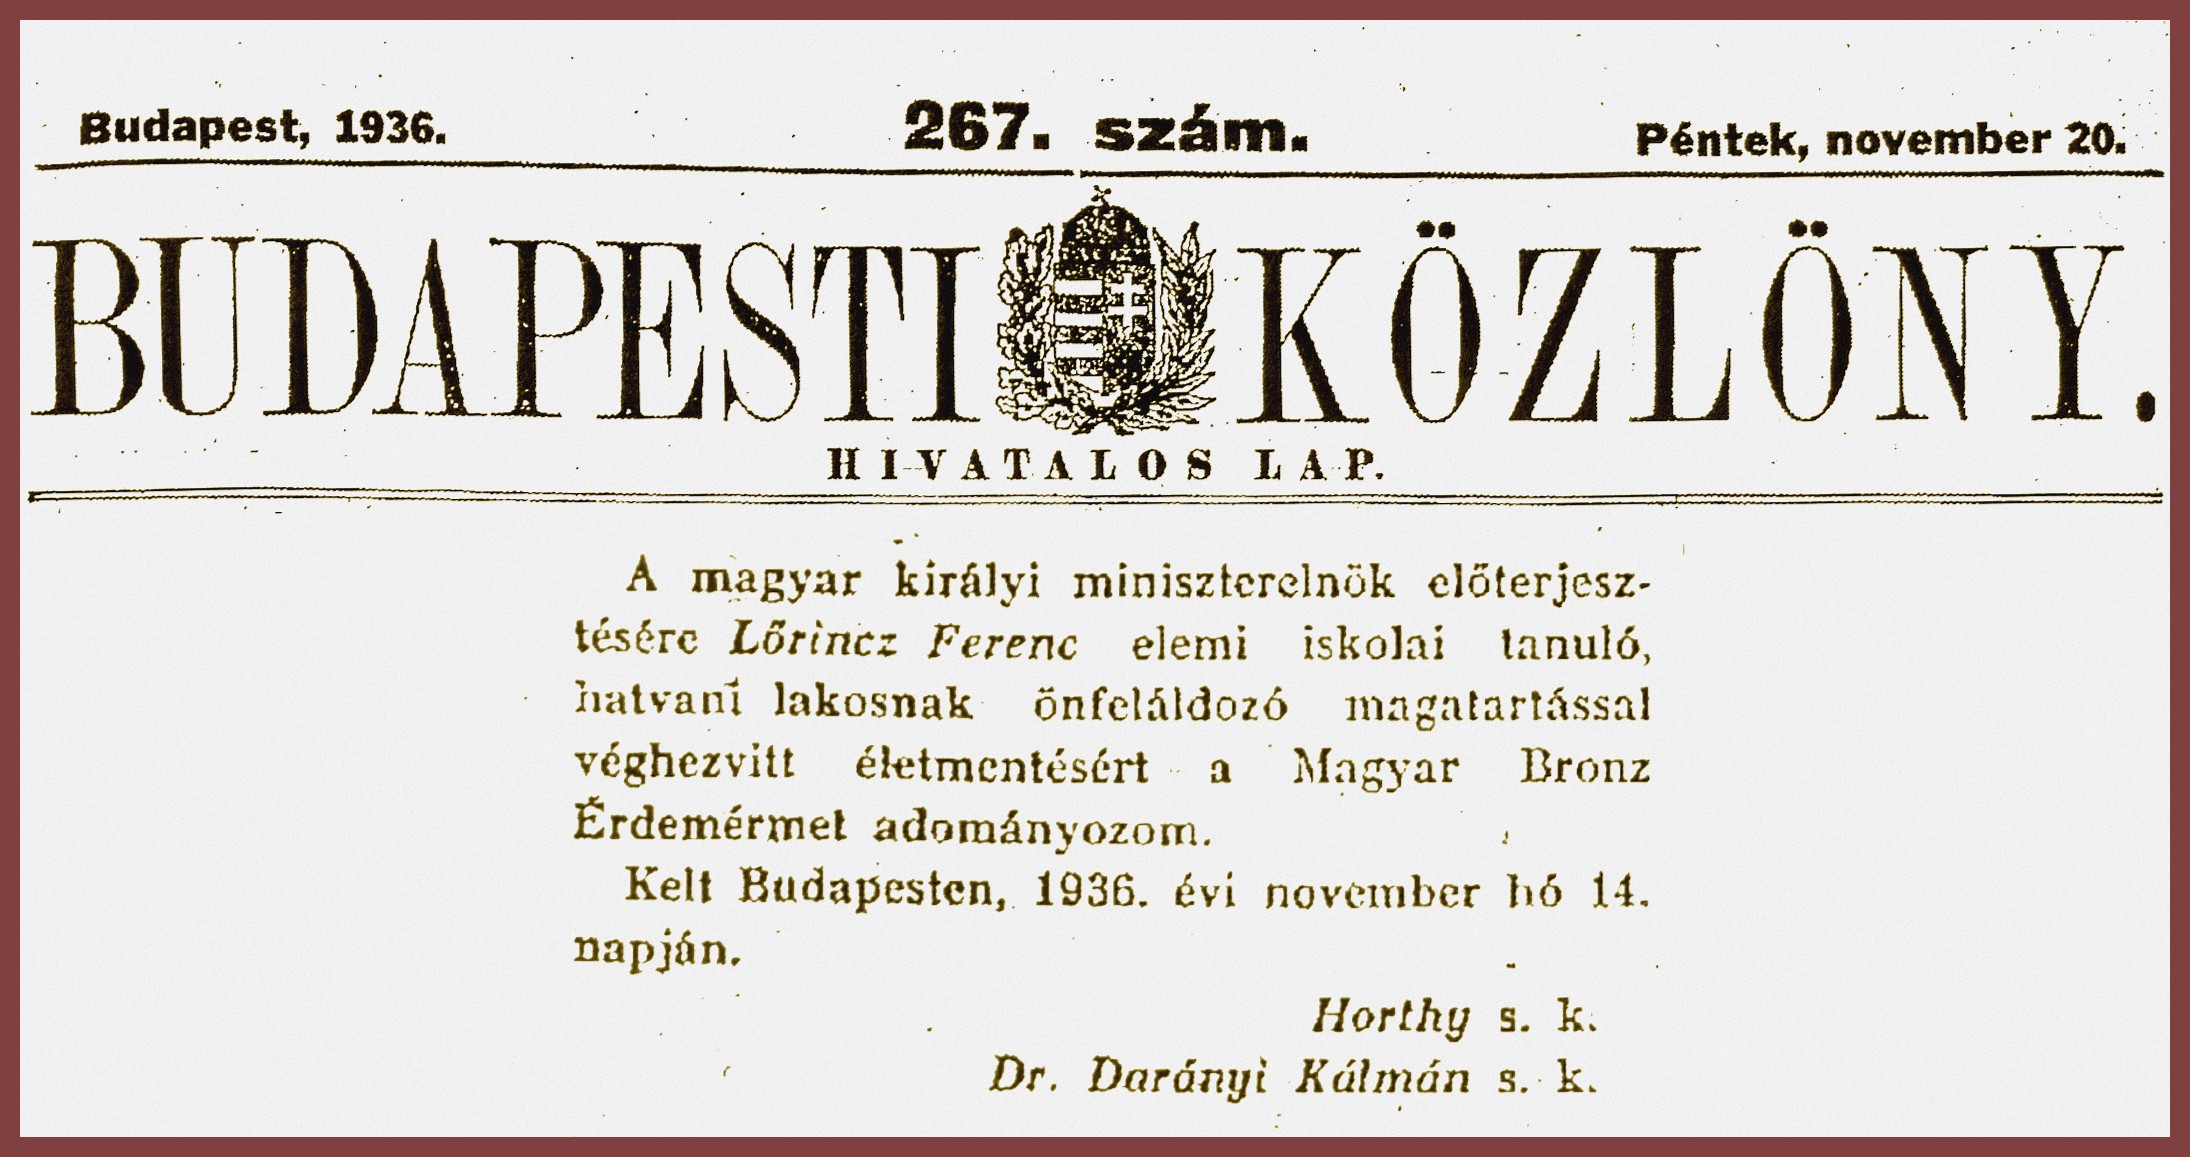 Magyar Közlöny 1936 v3.jpg